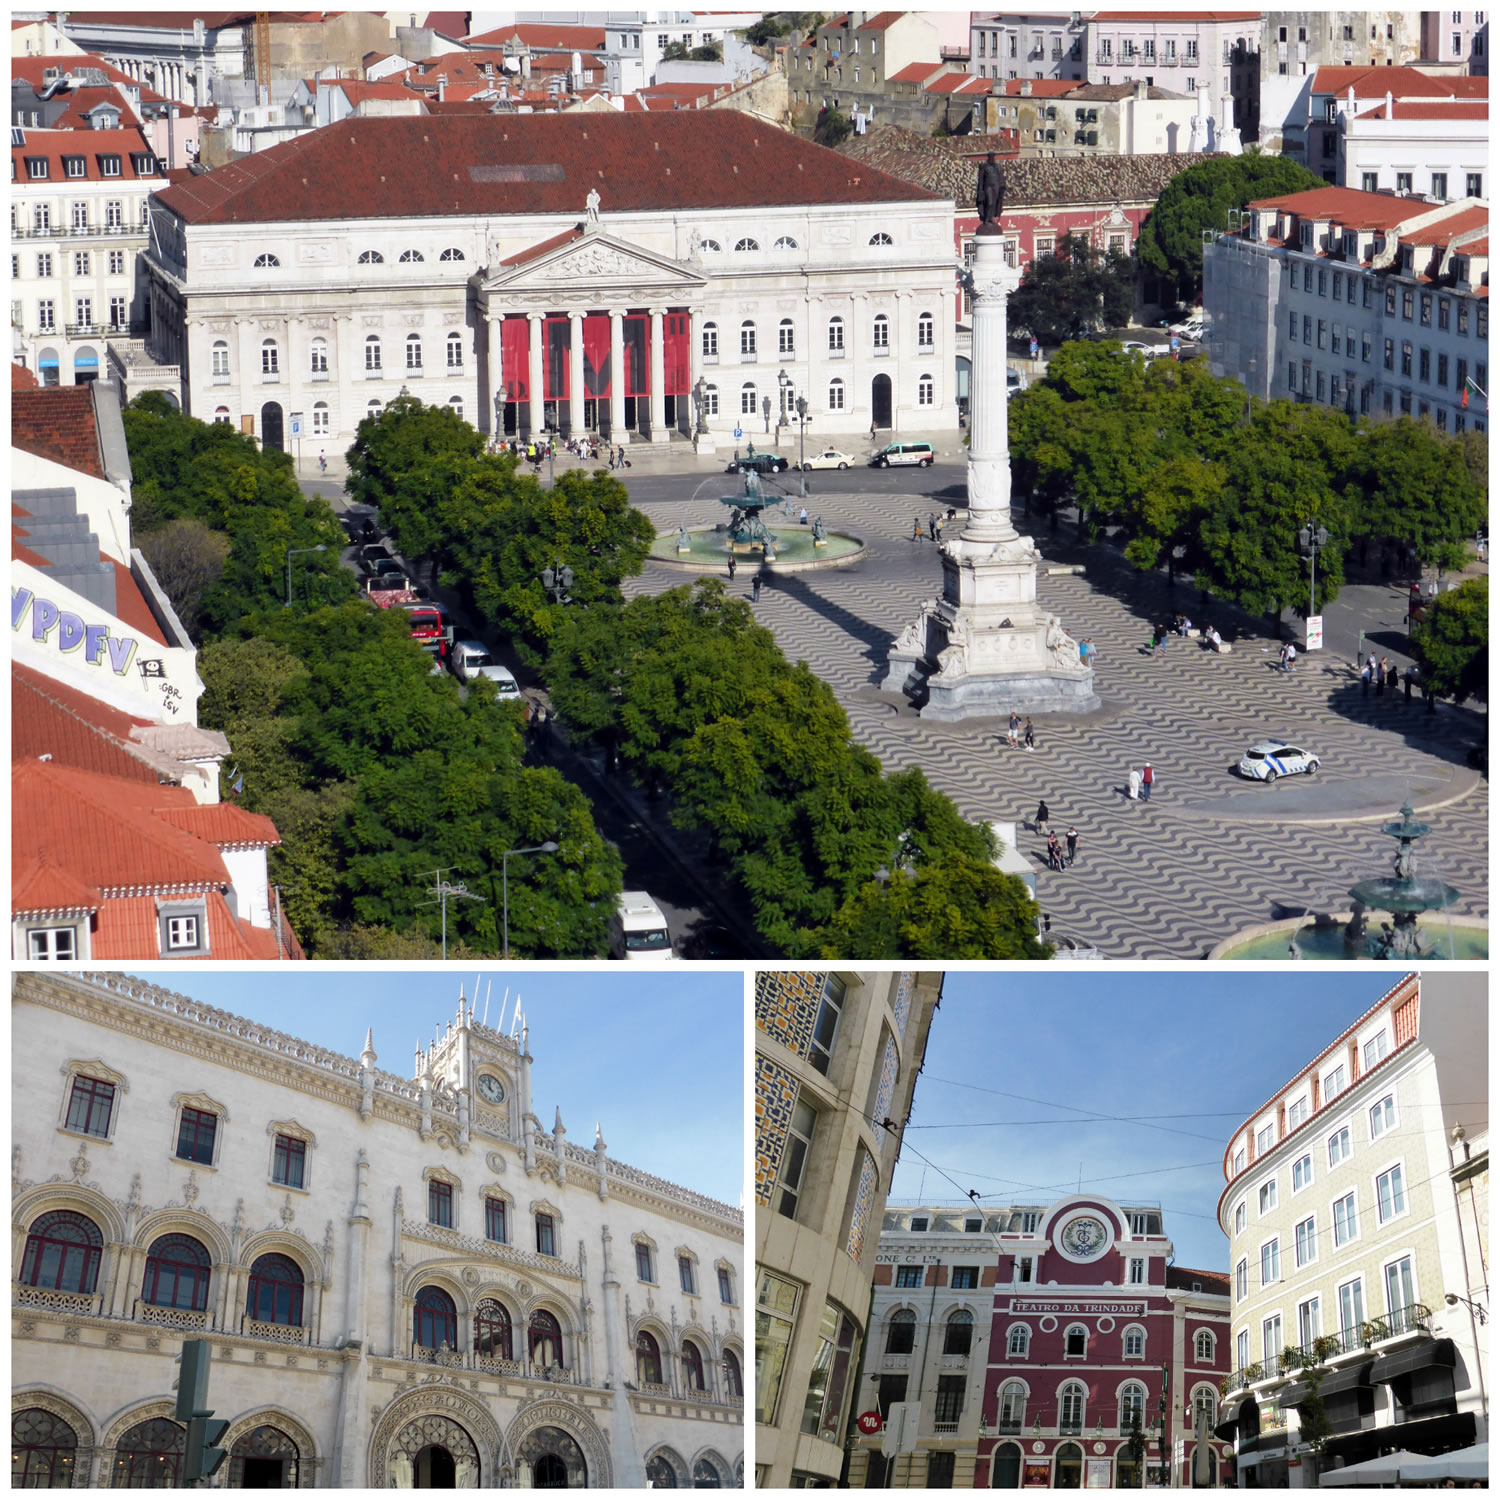 Lisbonne_Portugal_PracaRossio_baixa